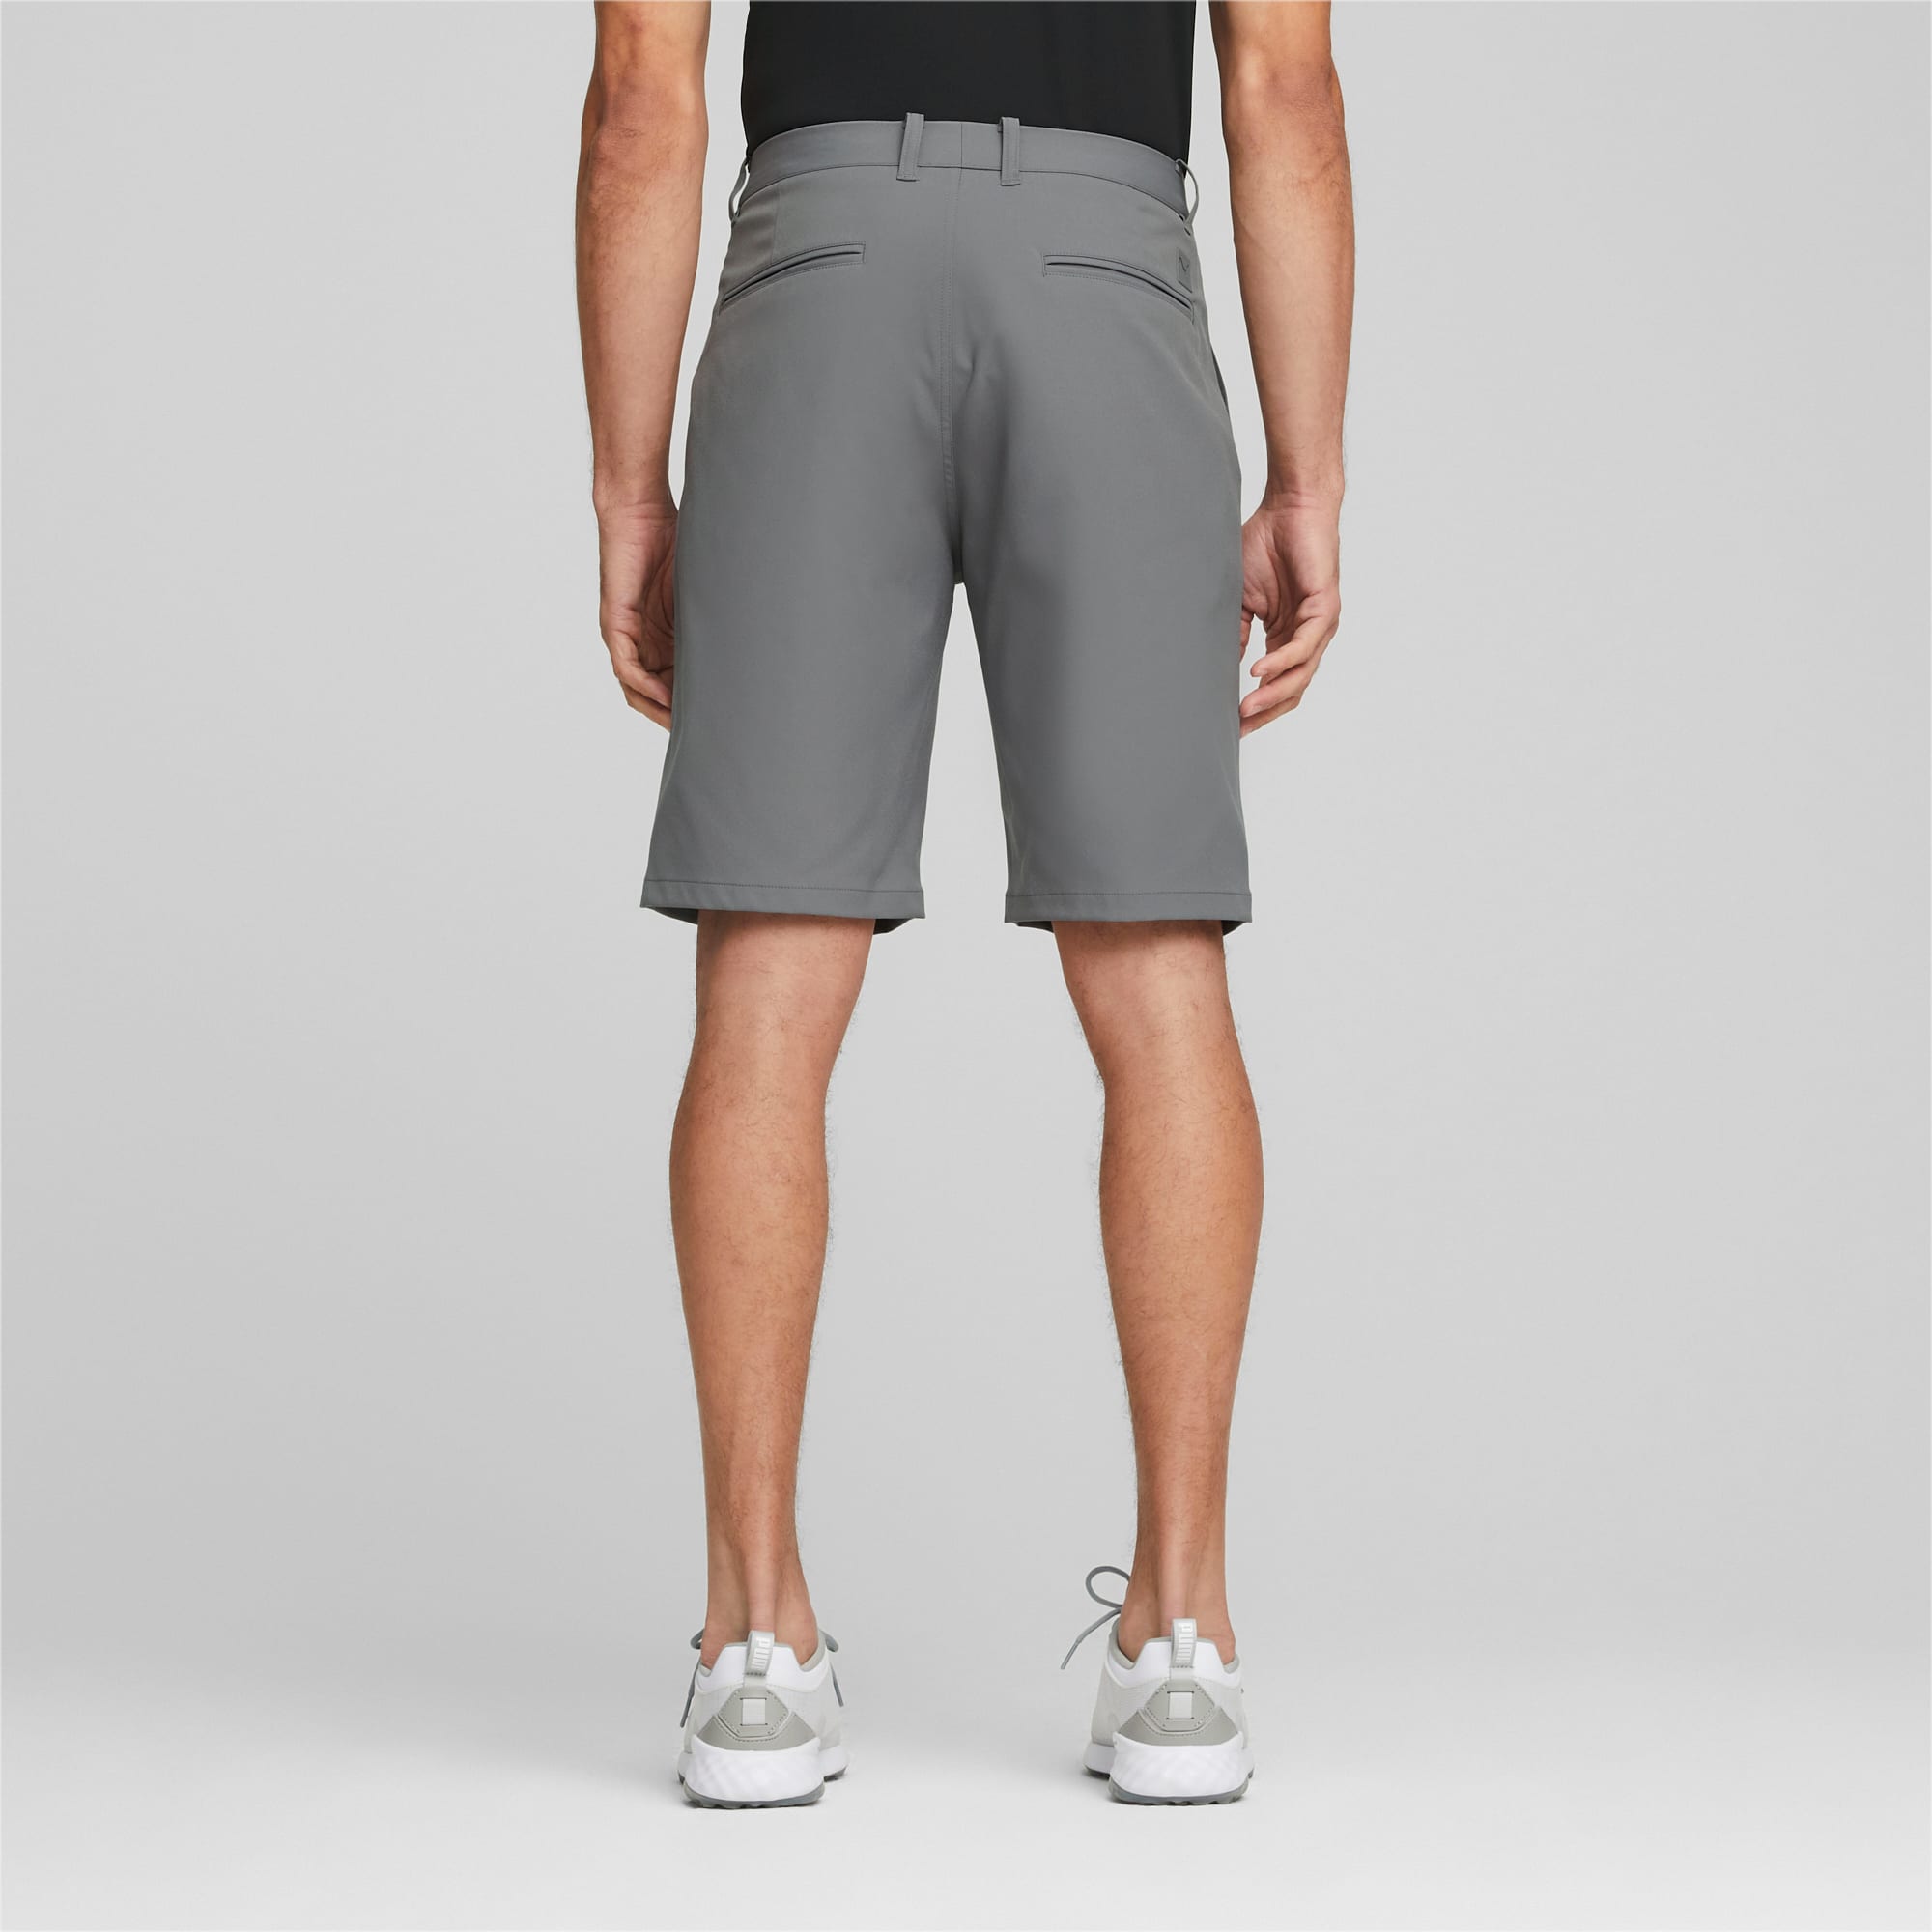 PUMA Shorts De Golf Dealer 10 Para Hombre, Gris